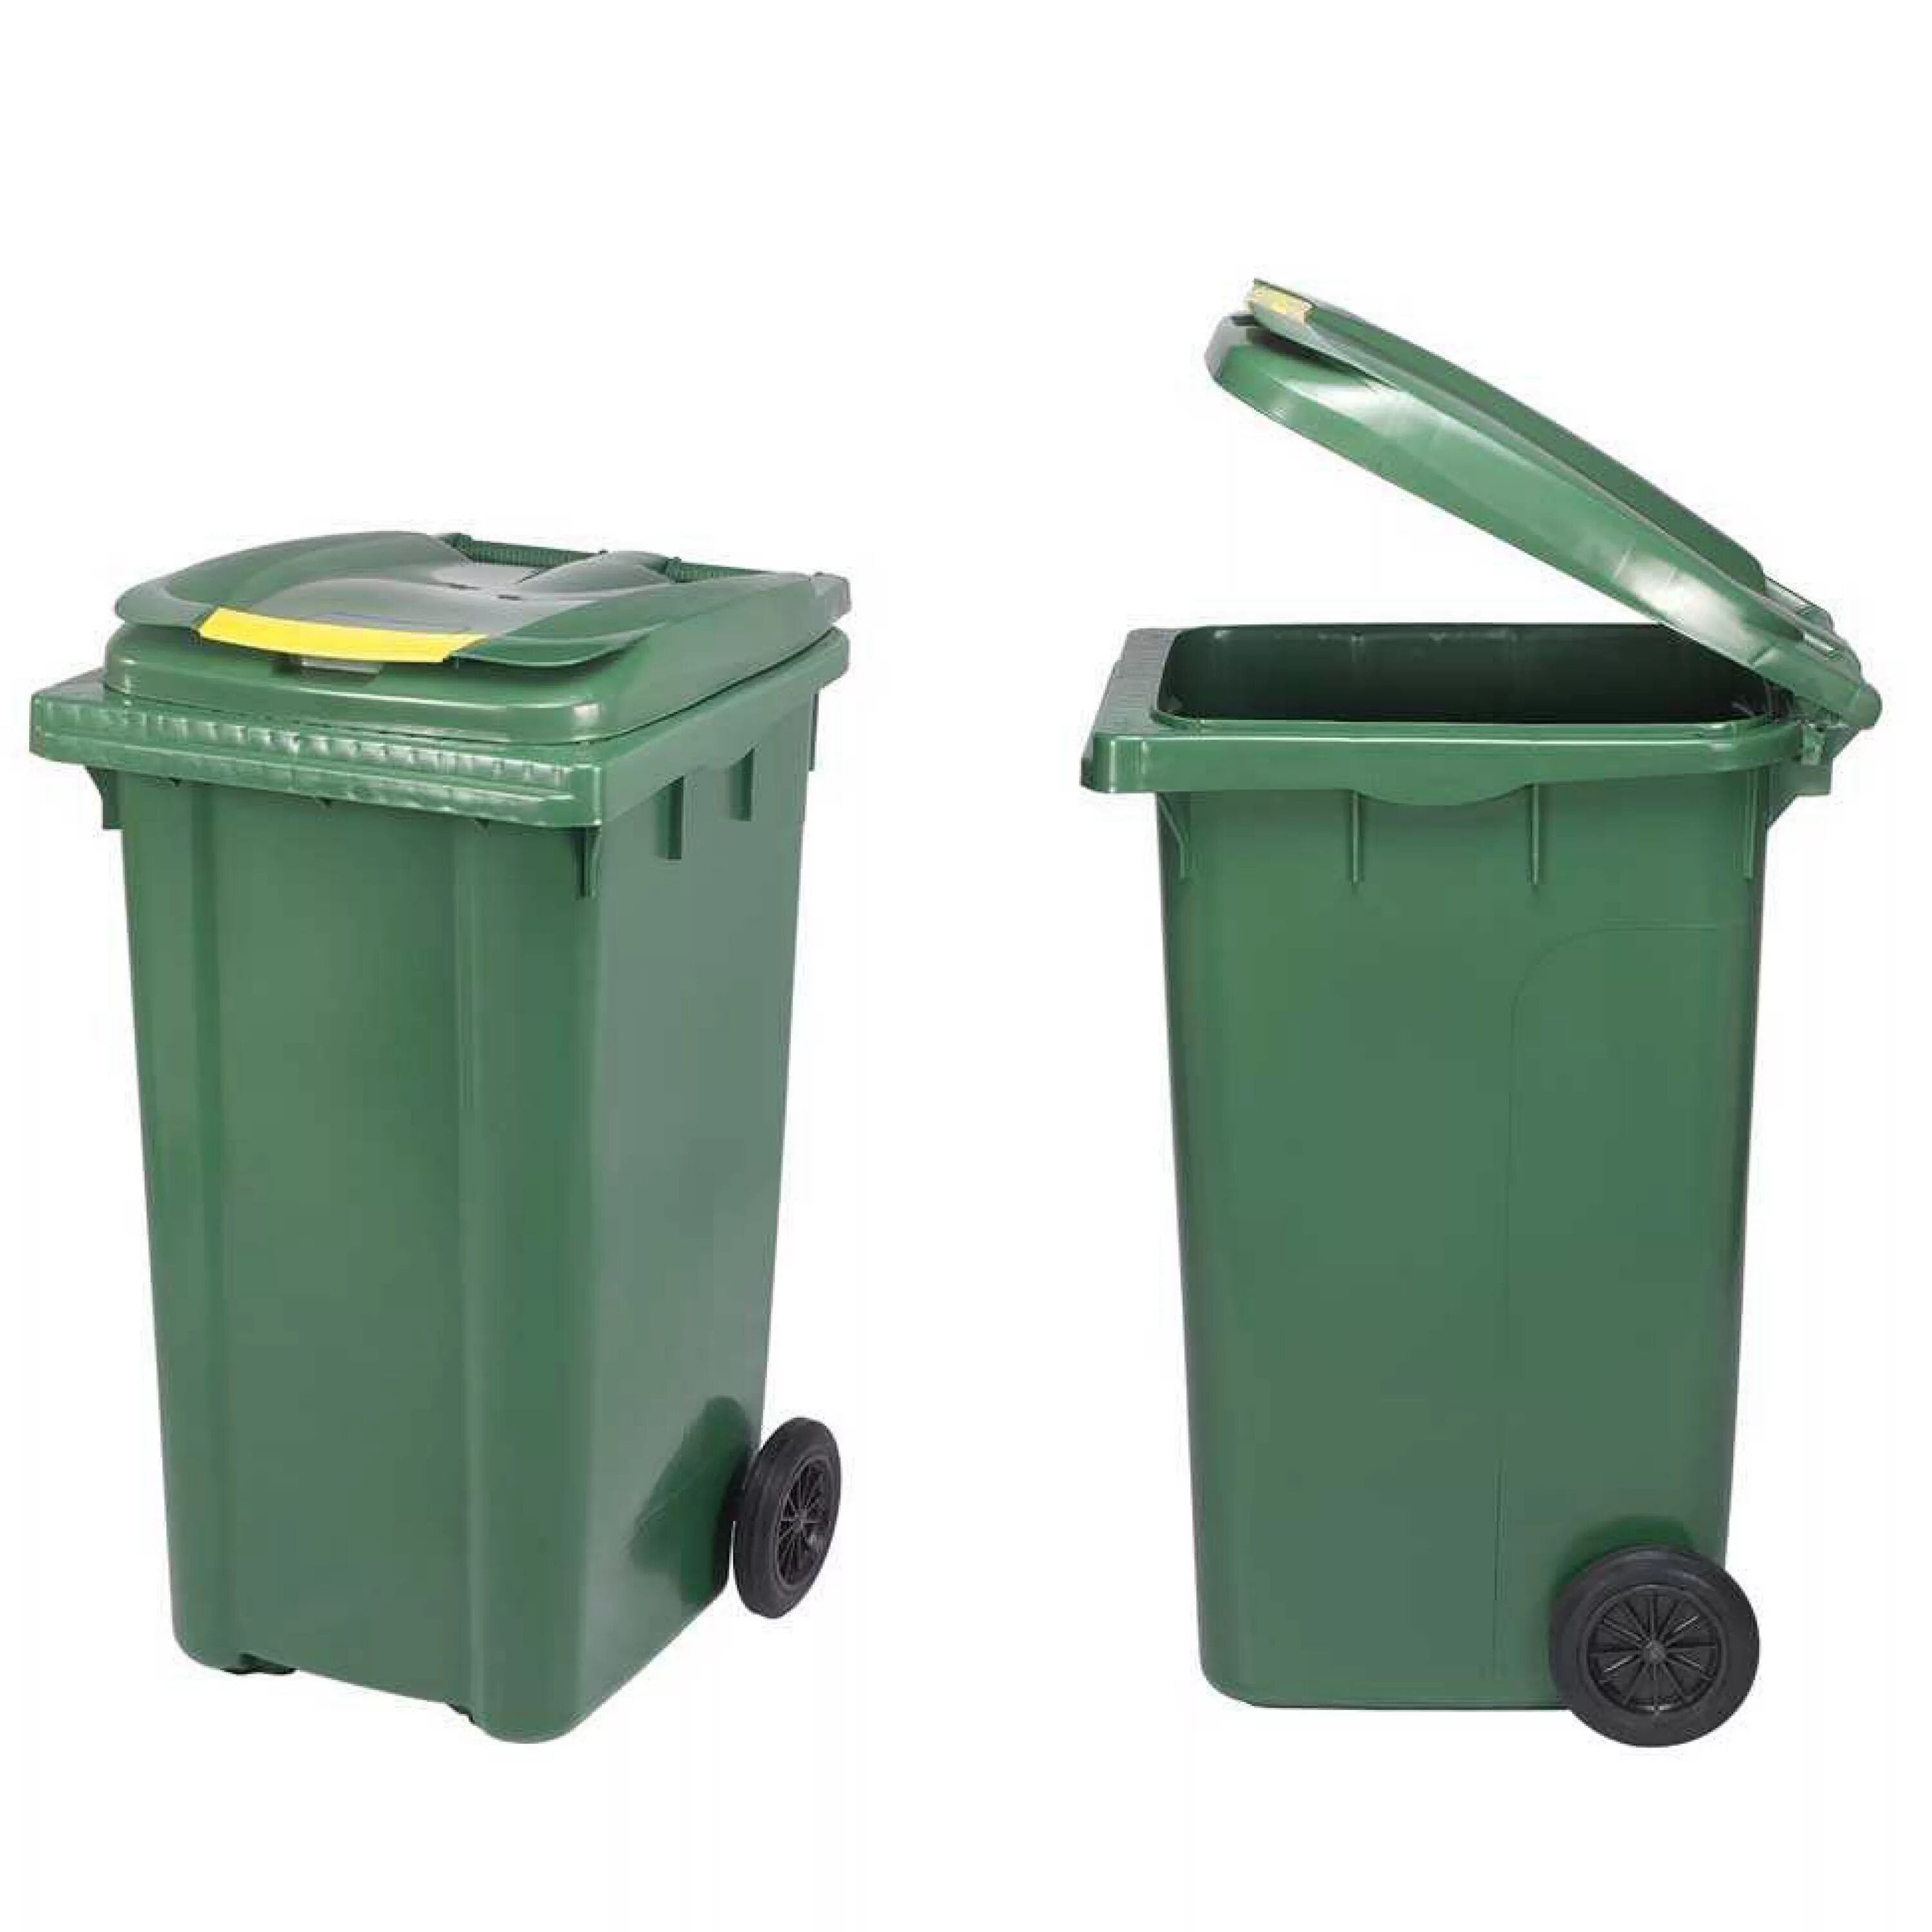 Мусорный бак 240л Леруа. МКТ 120 зеленый мусорный контейнер 120 л зеленый. Мусорный контейнер МКТ-240 зеленый.